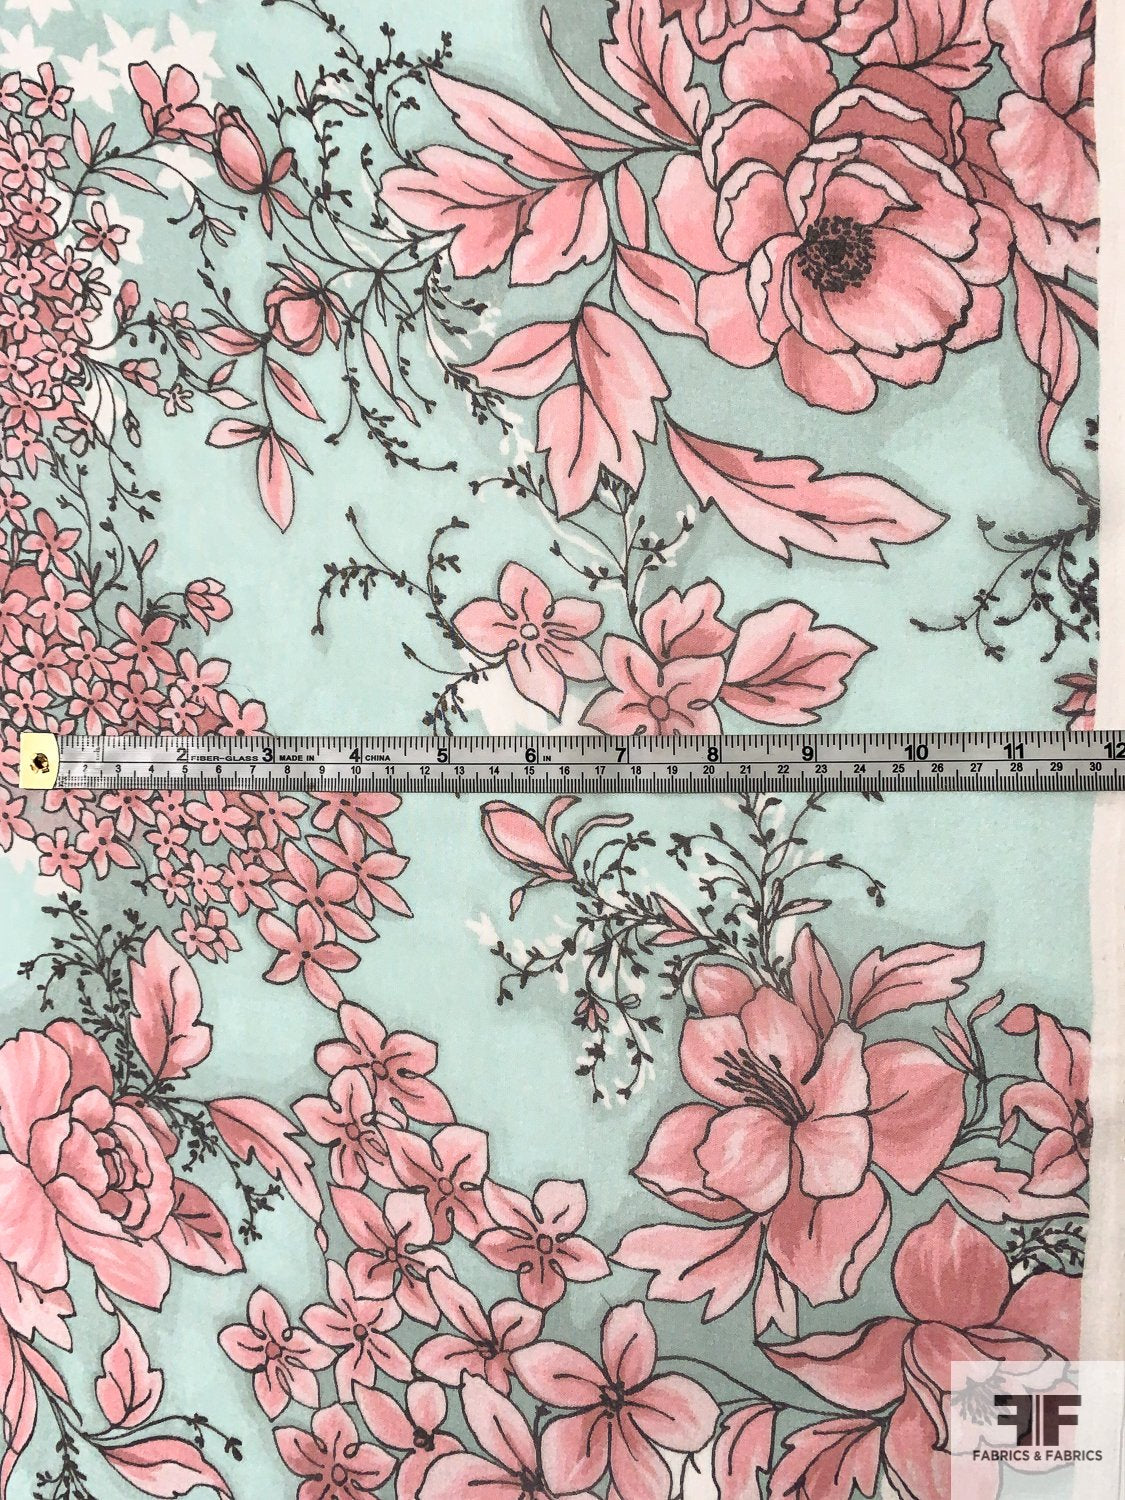 Dreamy Floral Printed Silk Chiffon - Rose Pink / Seafoam / Black